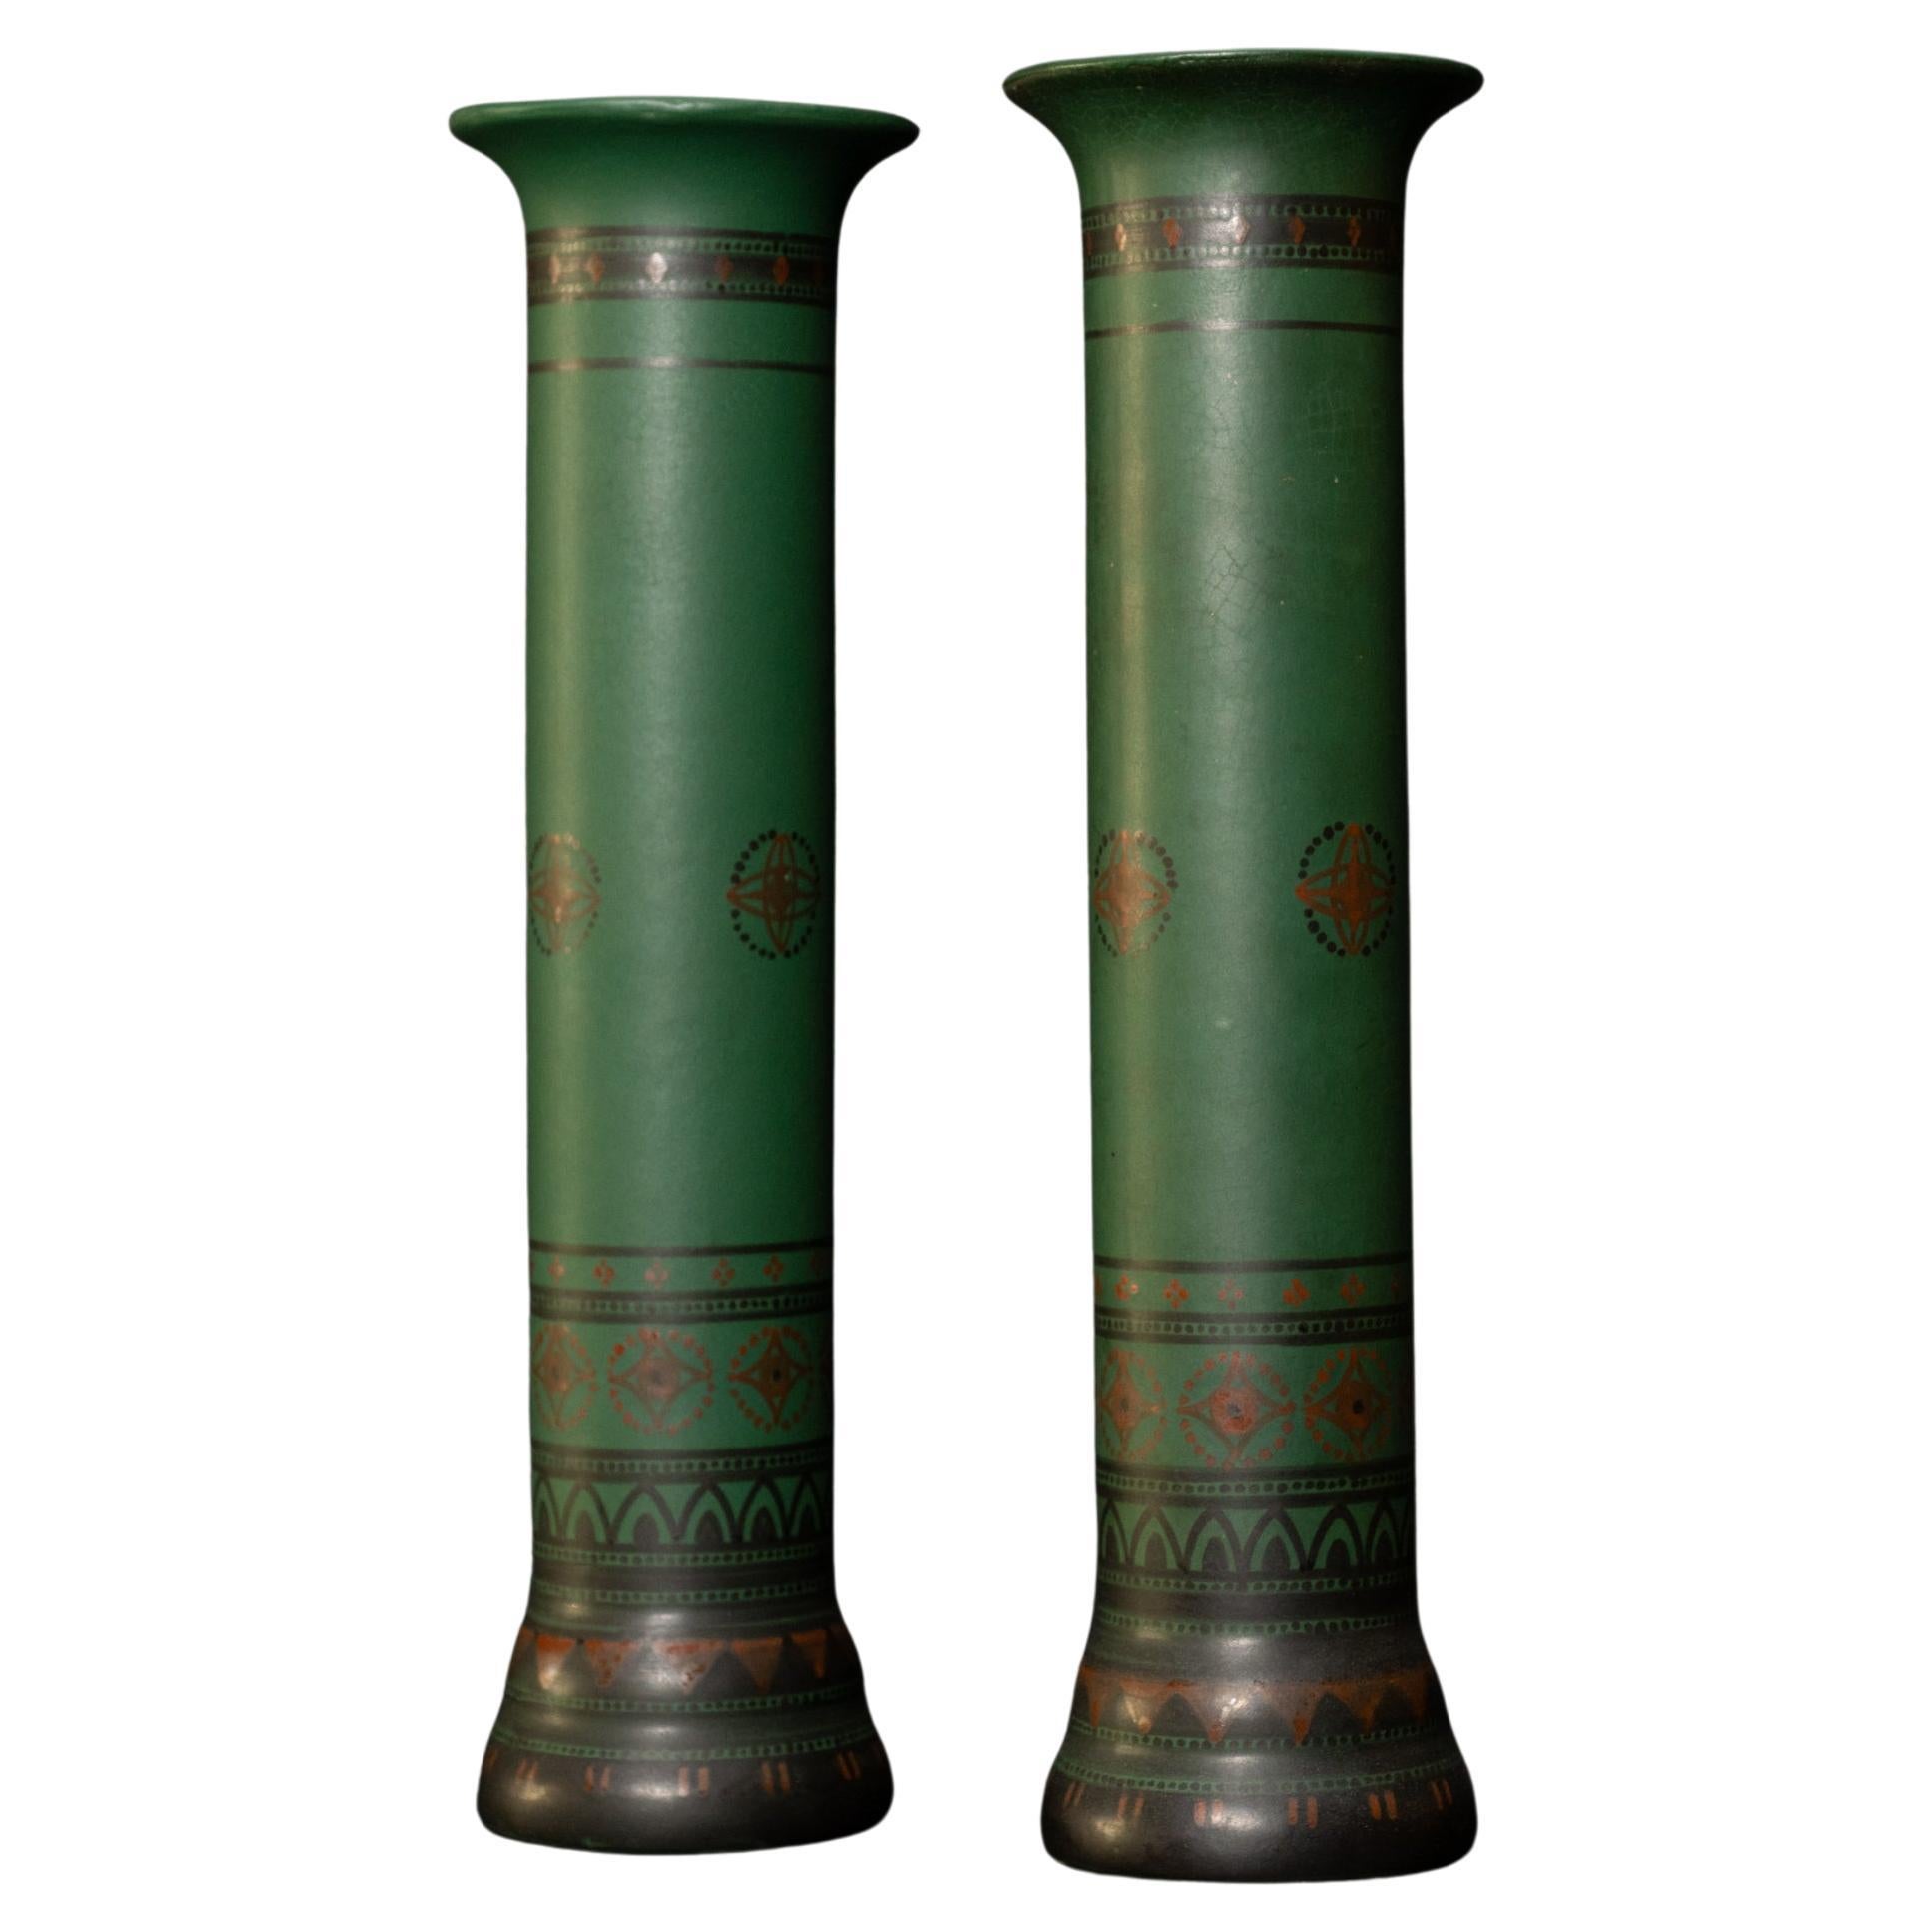 Pair of Green Art Nouveau Vases by Bert Neinhuis for Distel, Amsterdam